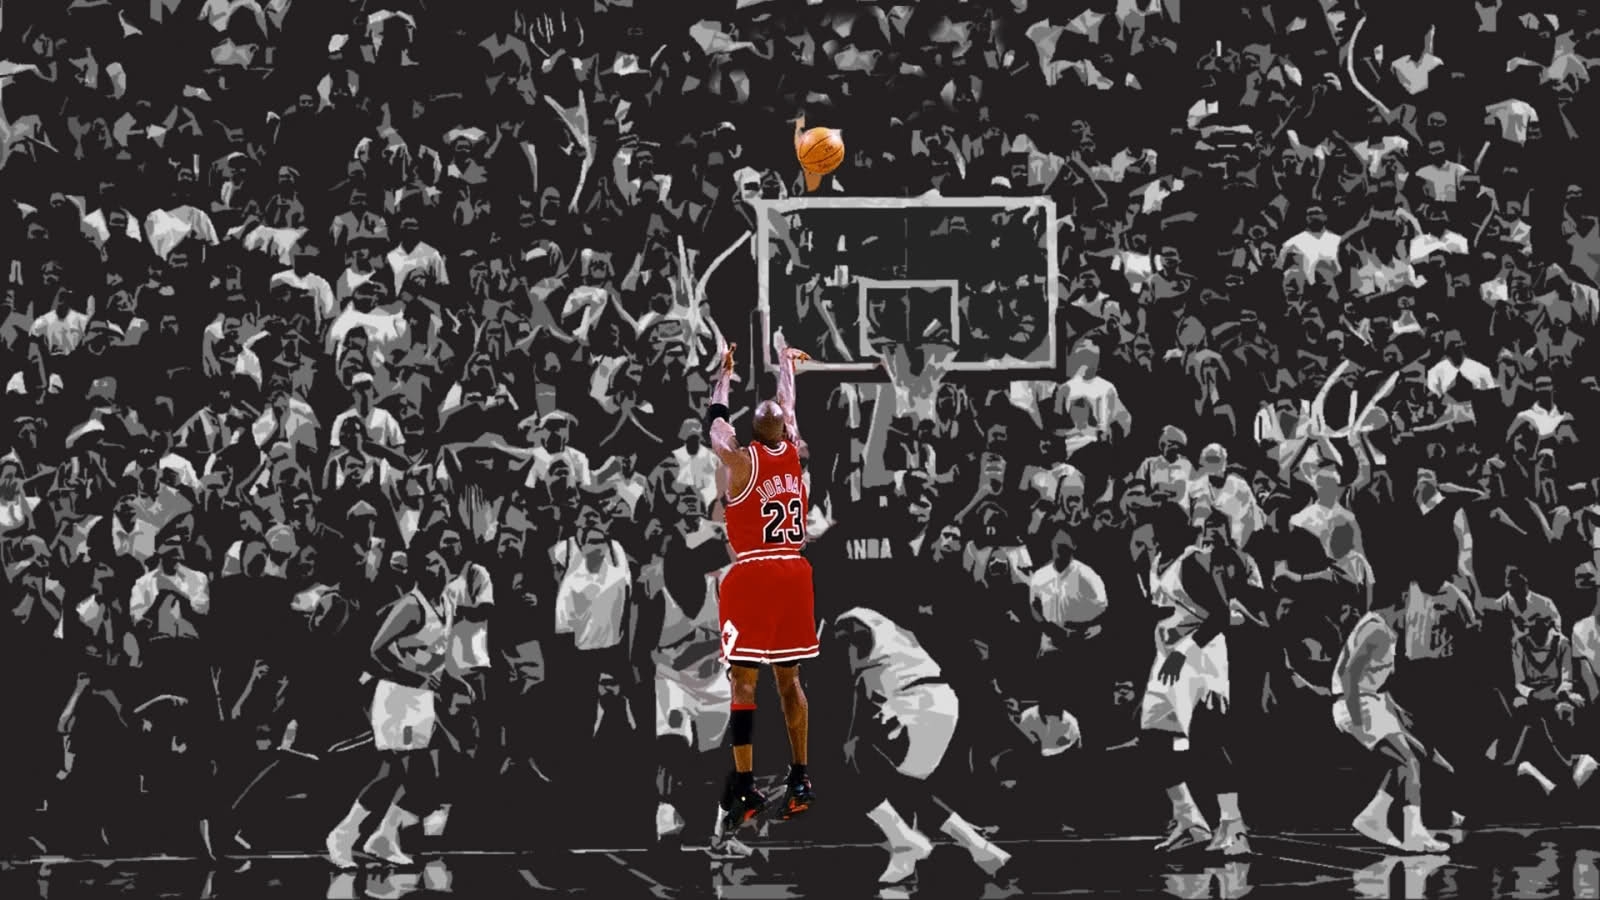 10 New Michael Jordan Wallpaper Hd FULL HD 1920×1080 For PC Background